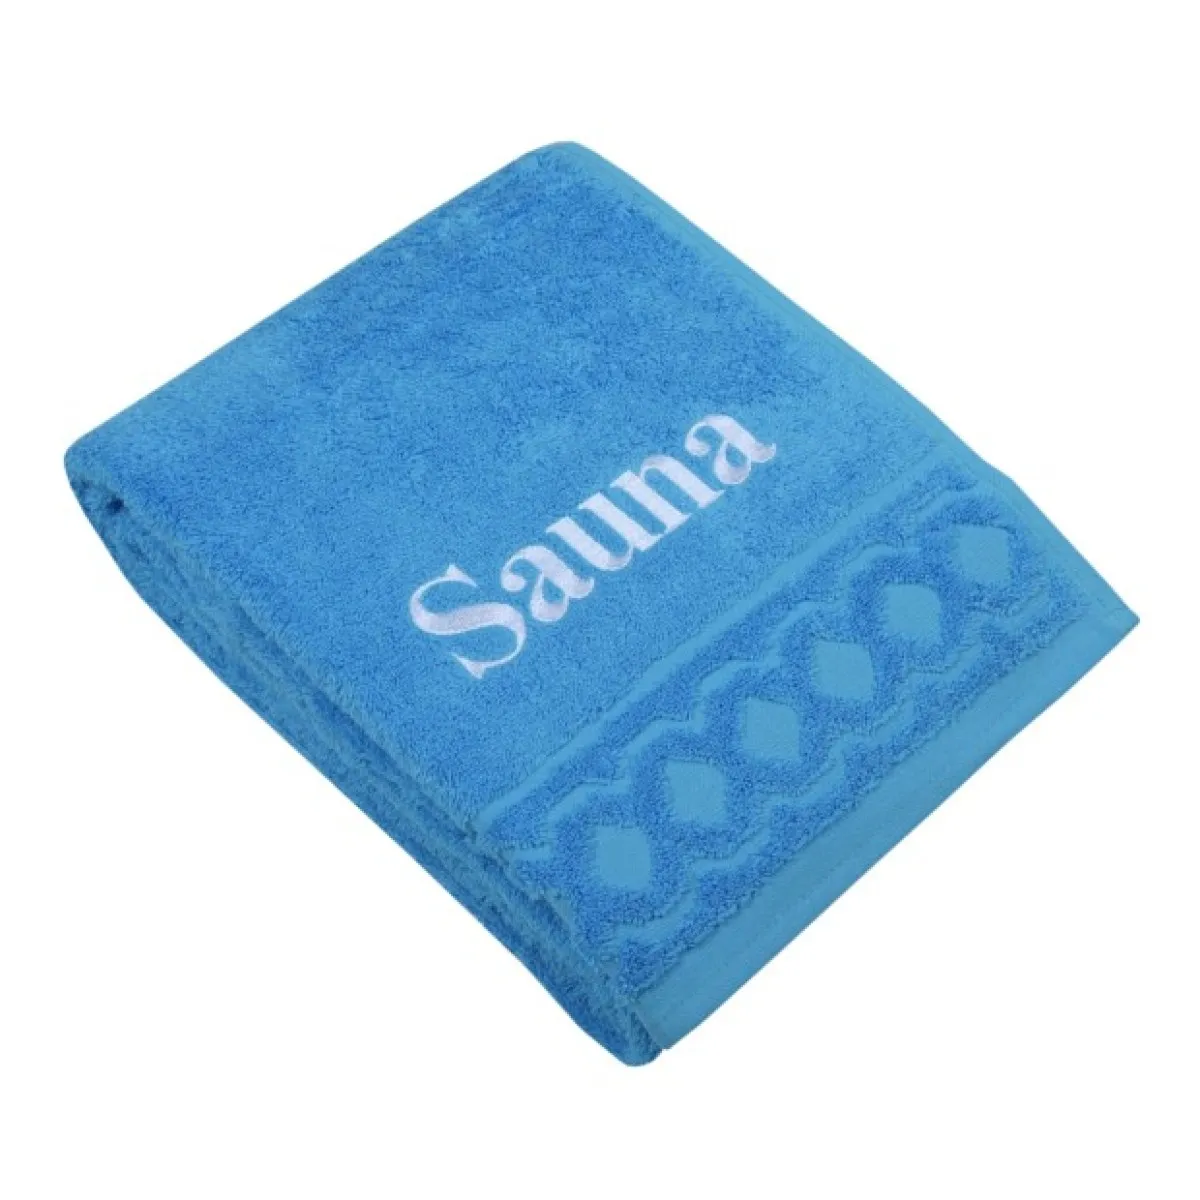 Jacquard R sauna towel ocean embroidered with sauna